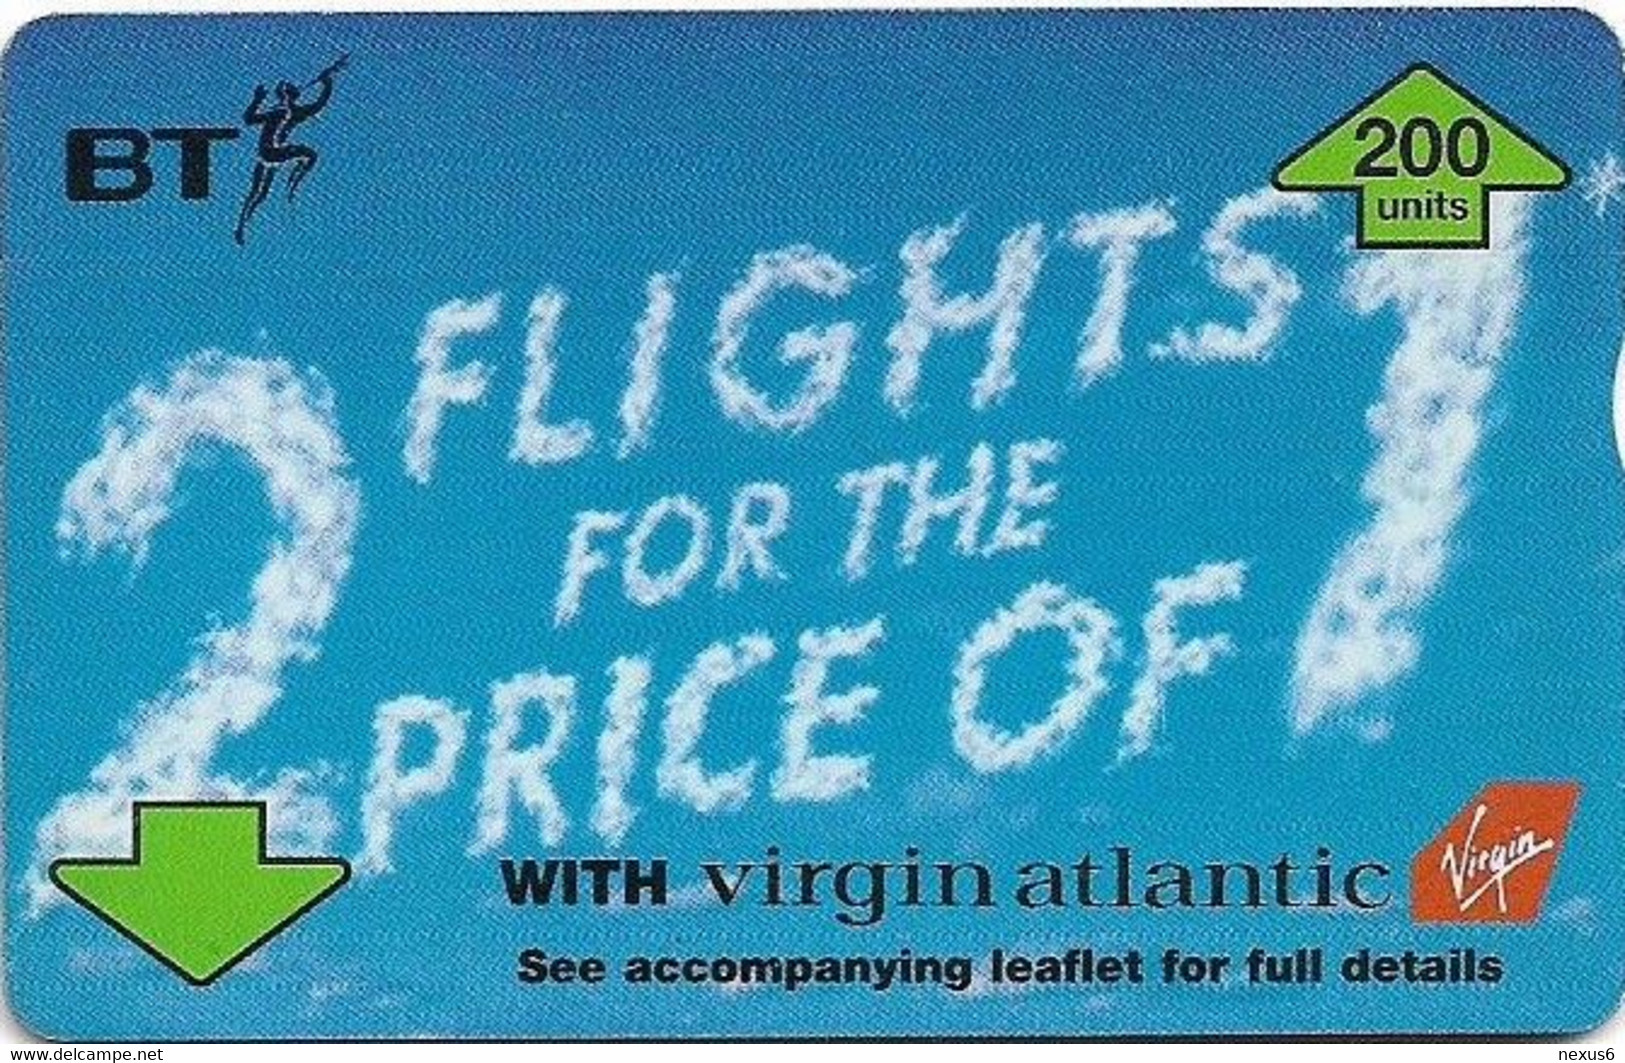 UK - BT - L&G - BTA-144 - Virgin Atlantic, 2 Flights For The Price Of 1 - 570B - 200Units, 31.600ex, Used - BT Advertising Issues